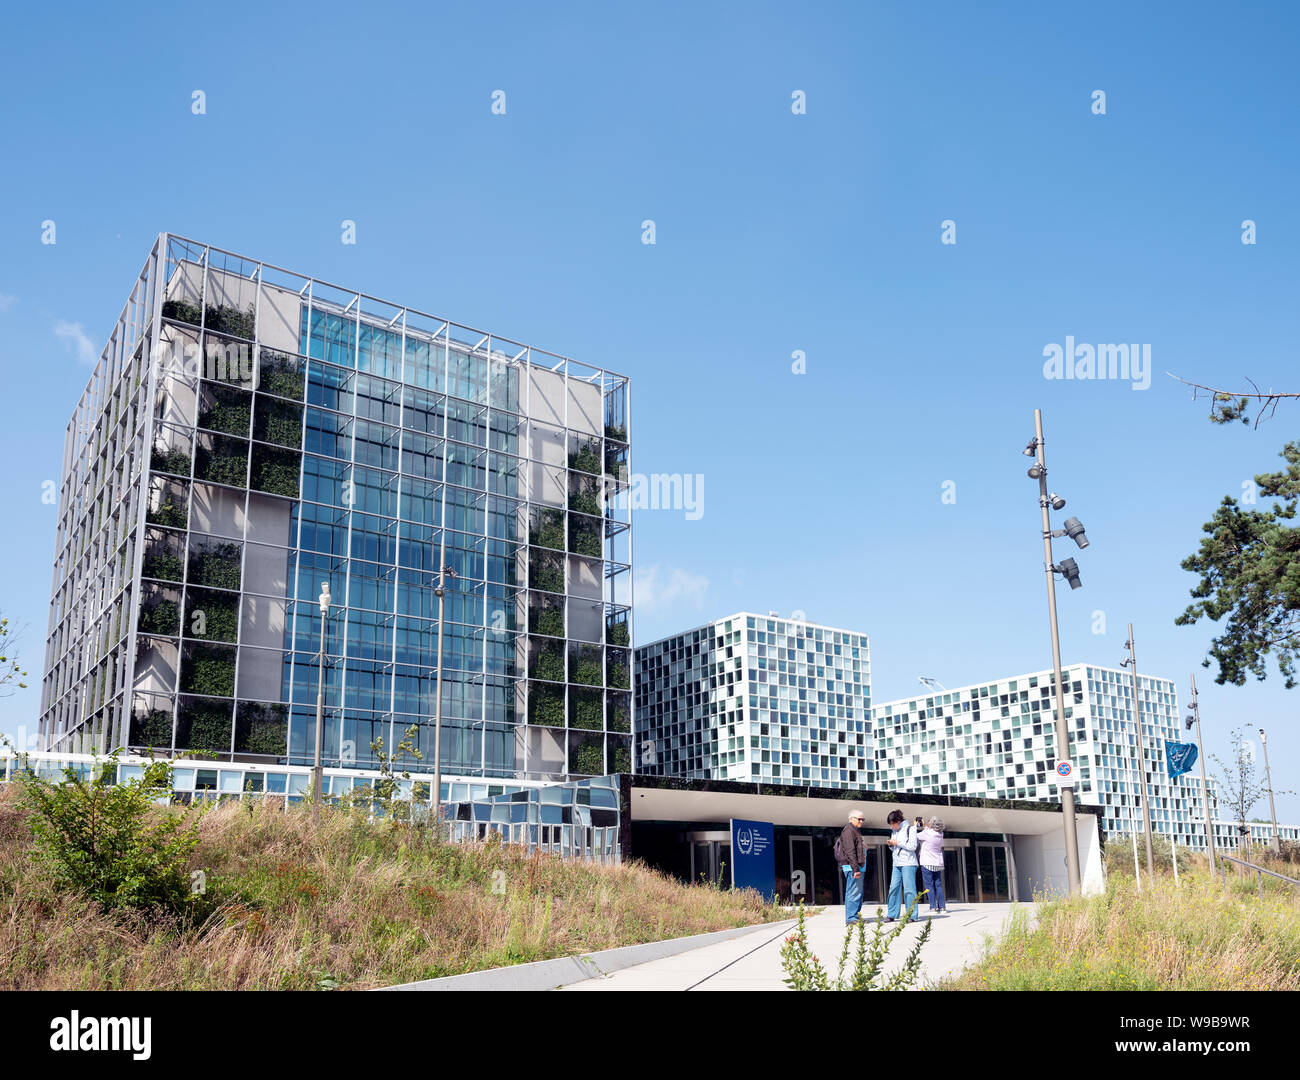 The Hague, Netherlands, 10 august 2019: international criminal court in dutch town of Den Haag under blue sky in summer Stock Photo